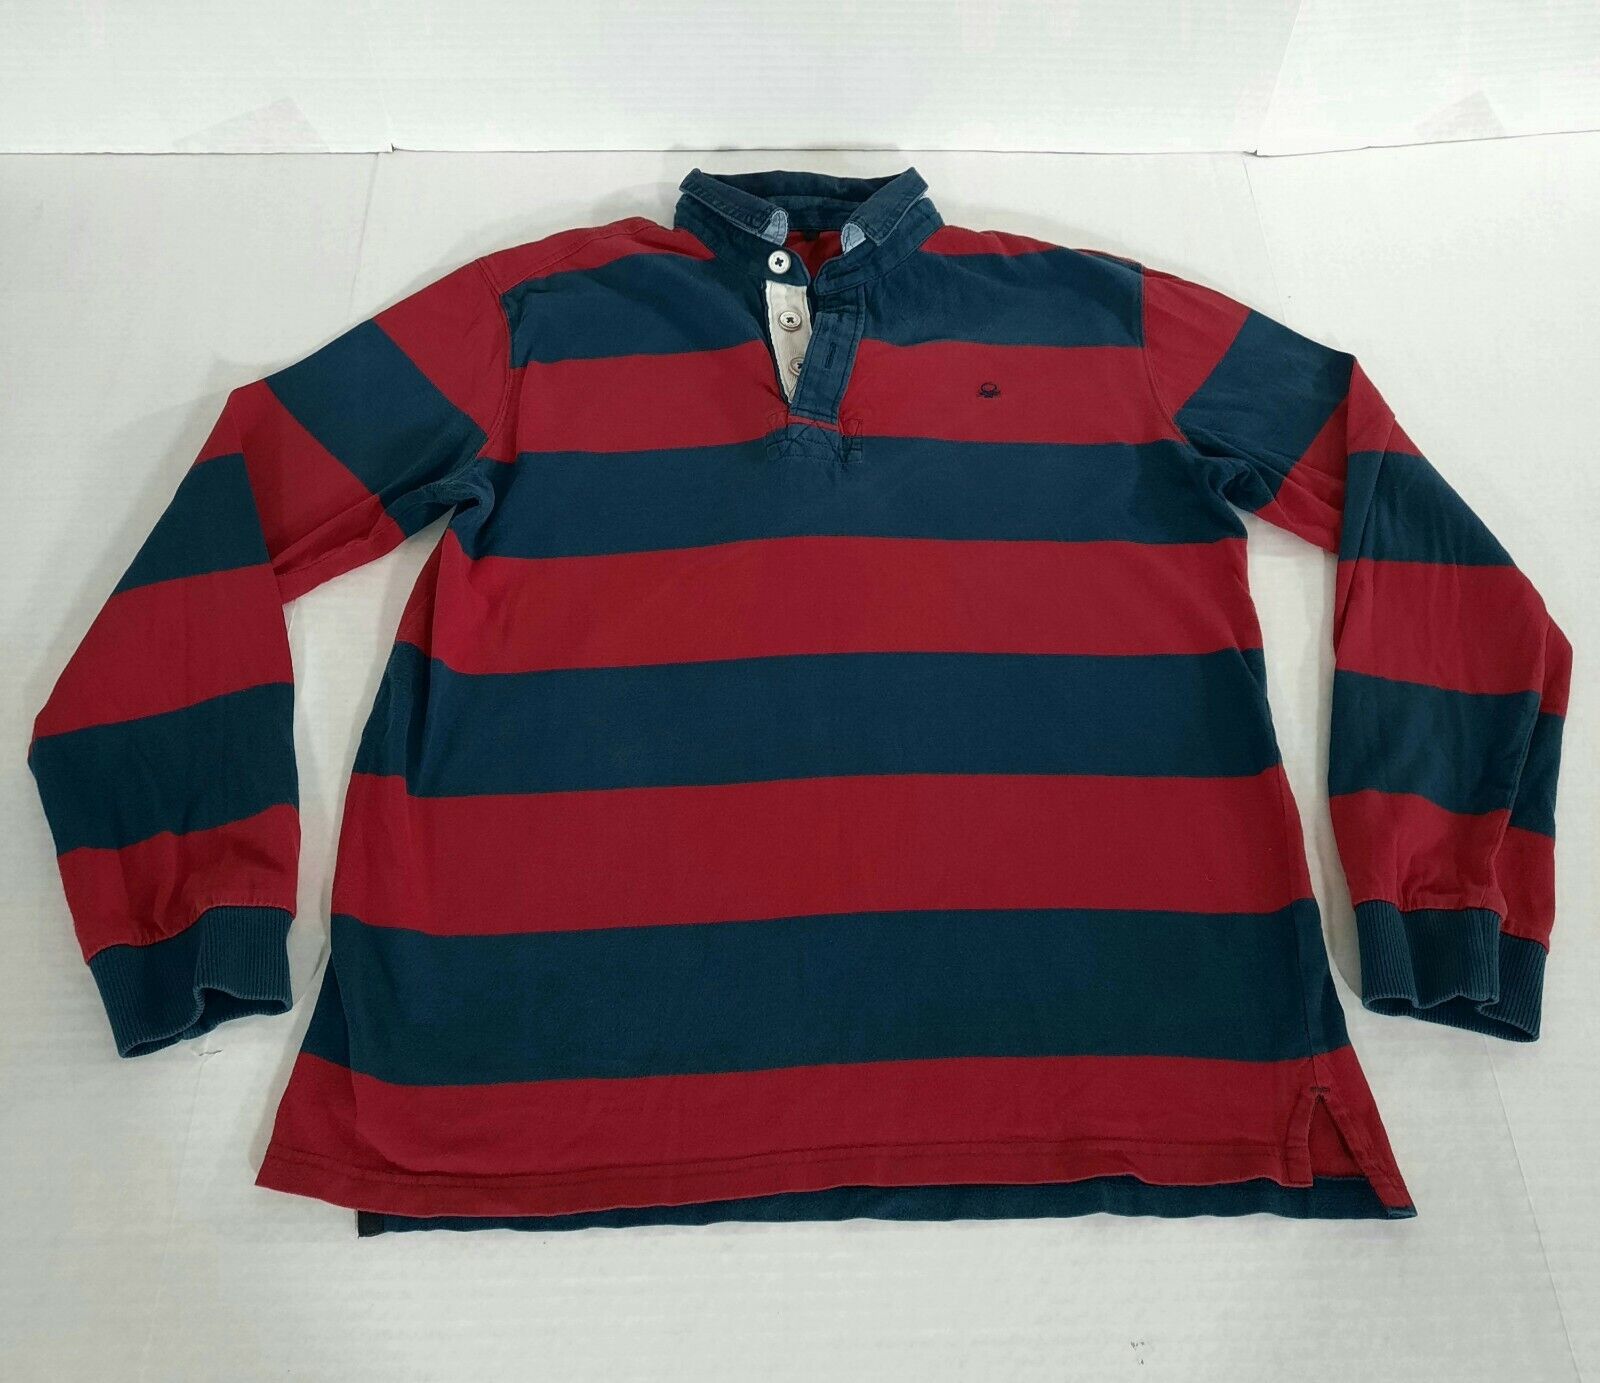 Stile Surprise price National uniform free shipping Benetton Colorblock Striped LS Rugby S Logo Size Men Shirt